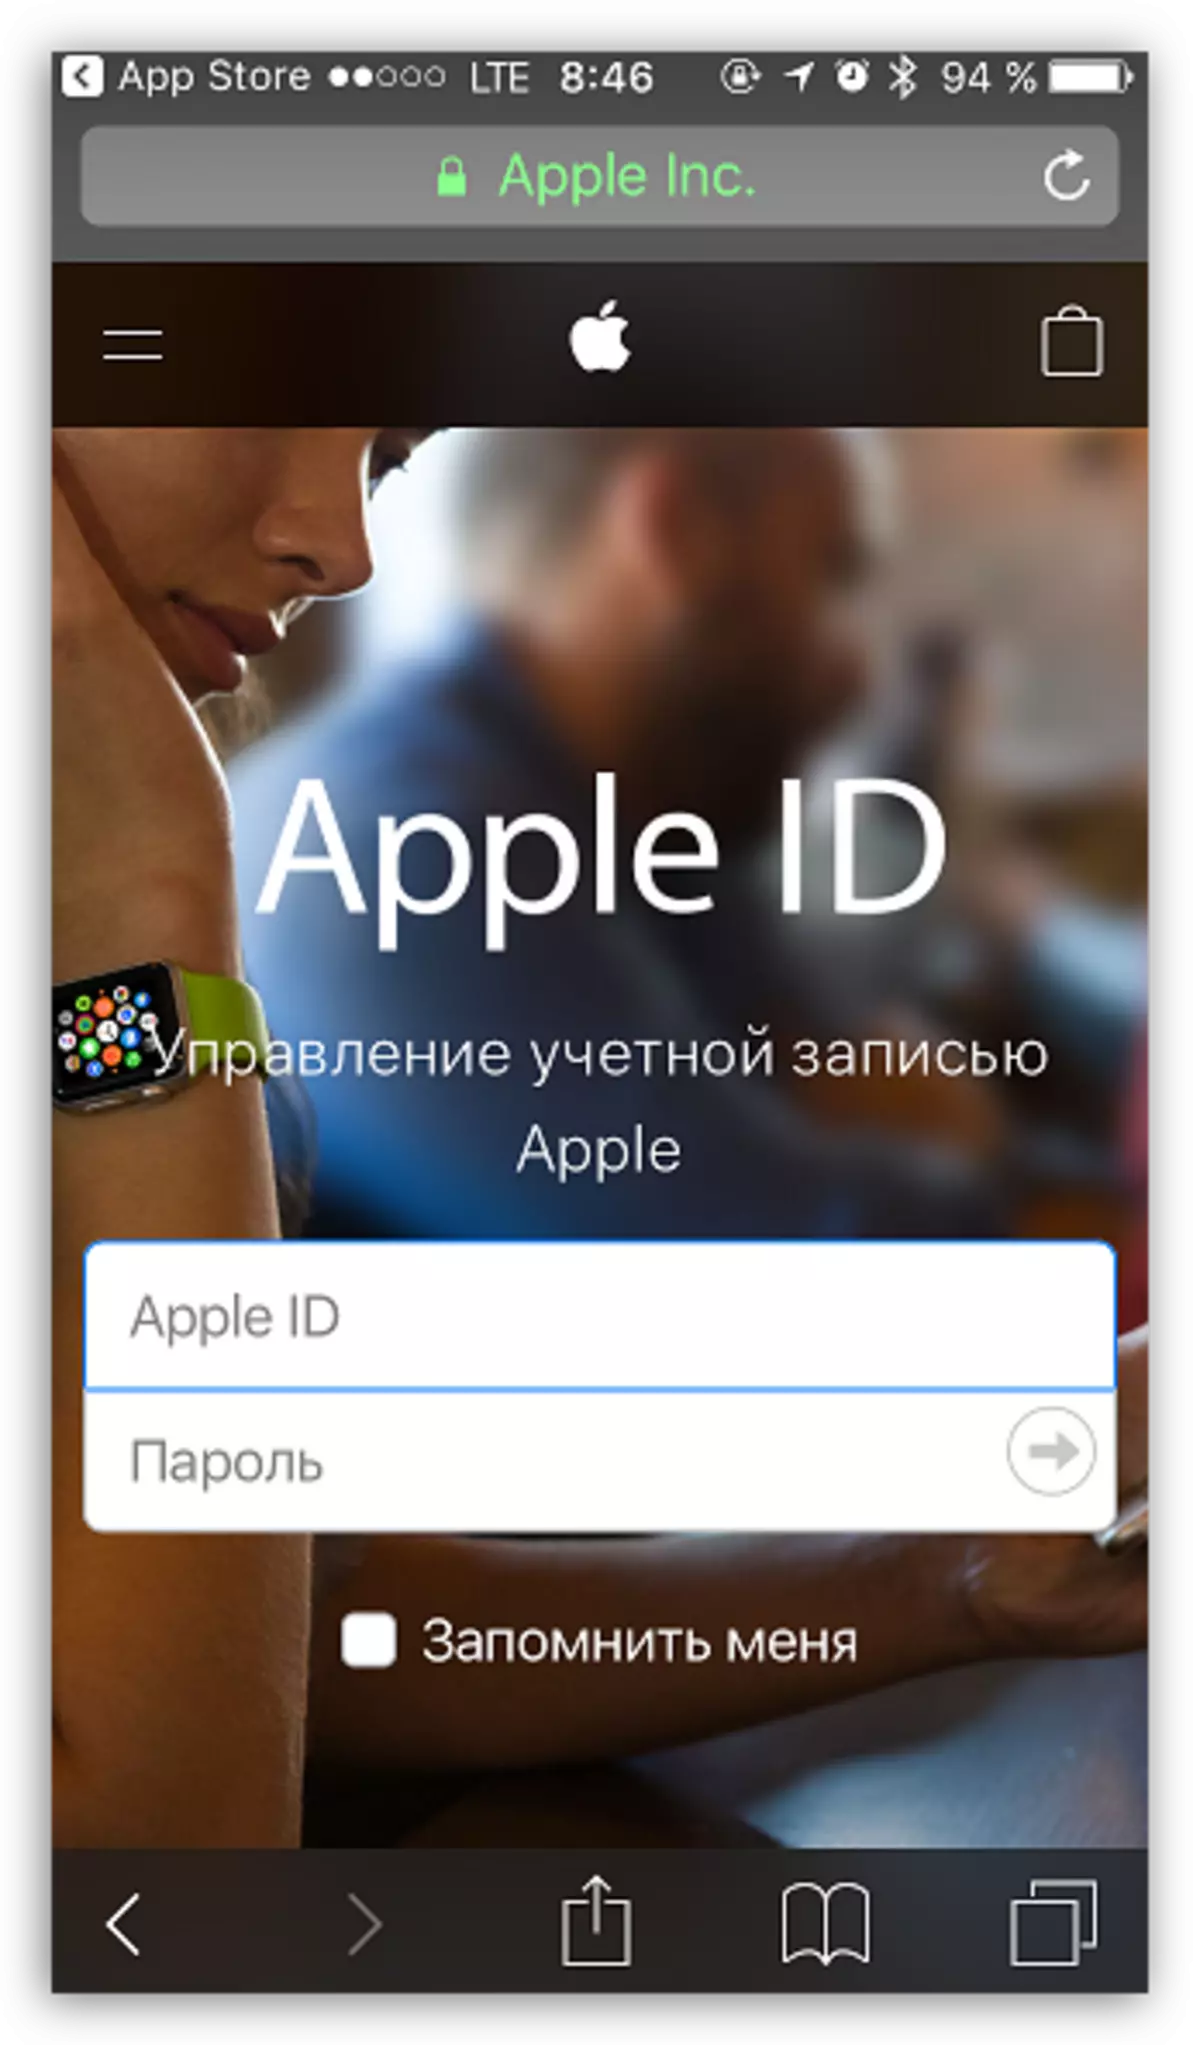 Entering Apple ID iPhone